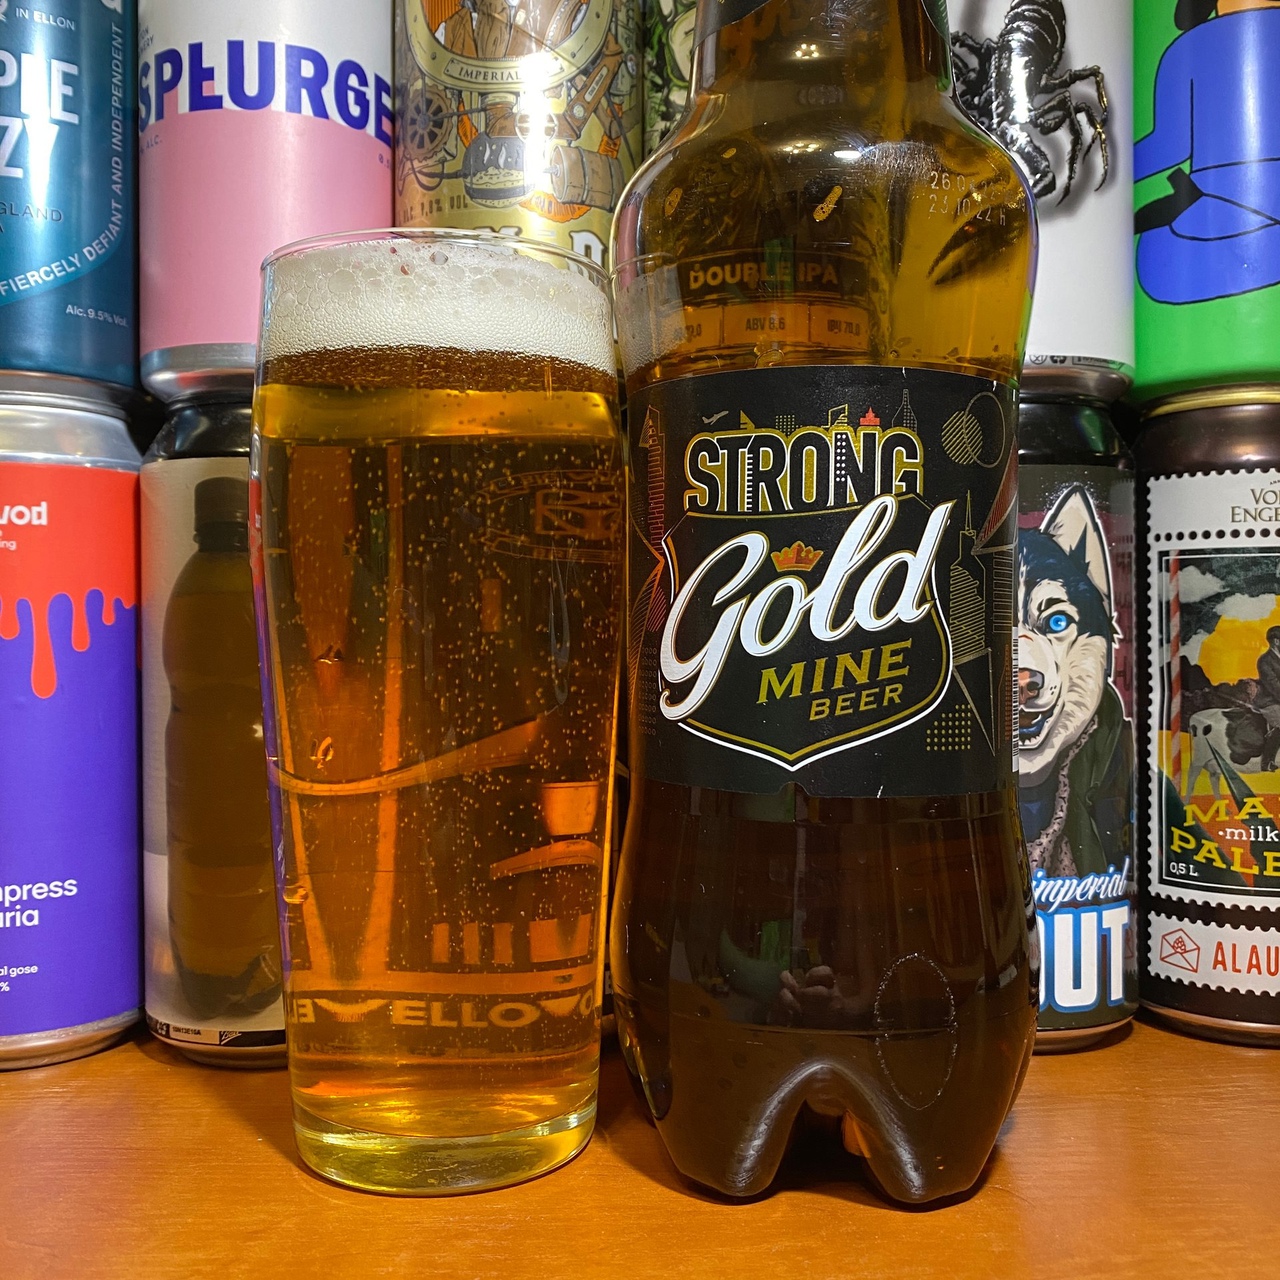 Gold beer. Голд майн бир Стронг. Пиво Gold mine Beer. Gold mine Beer ячменное. Голд Стронг пиво 8%.